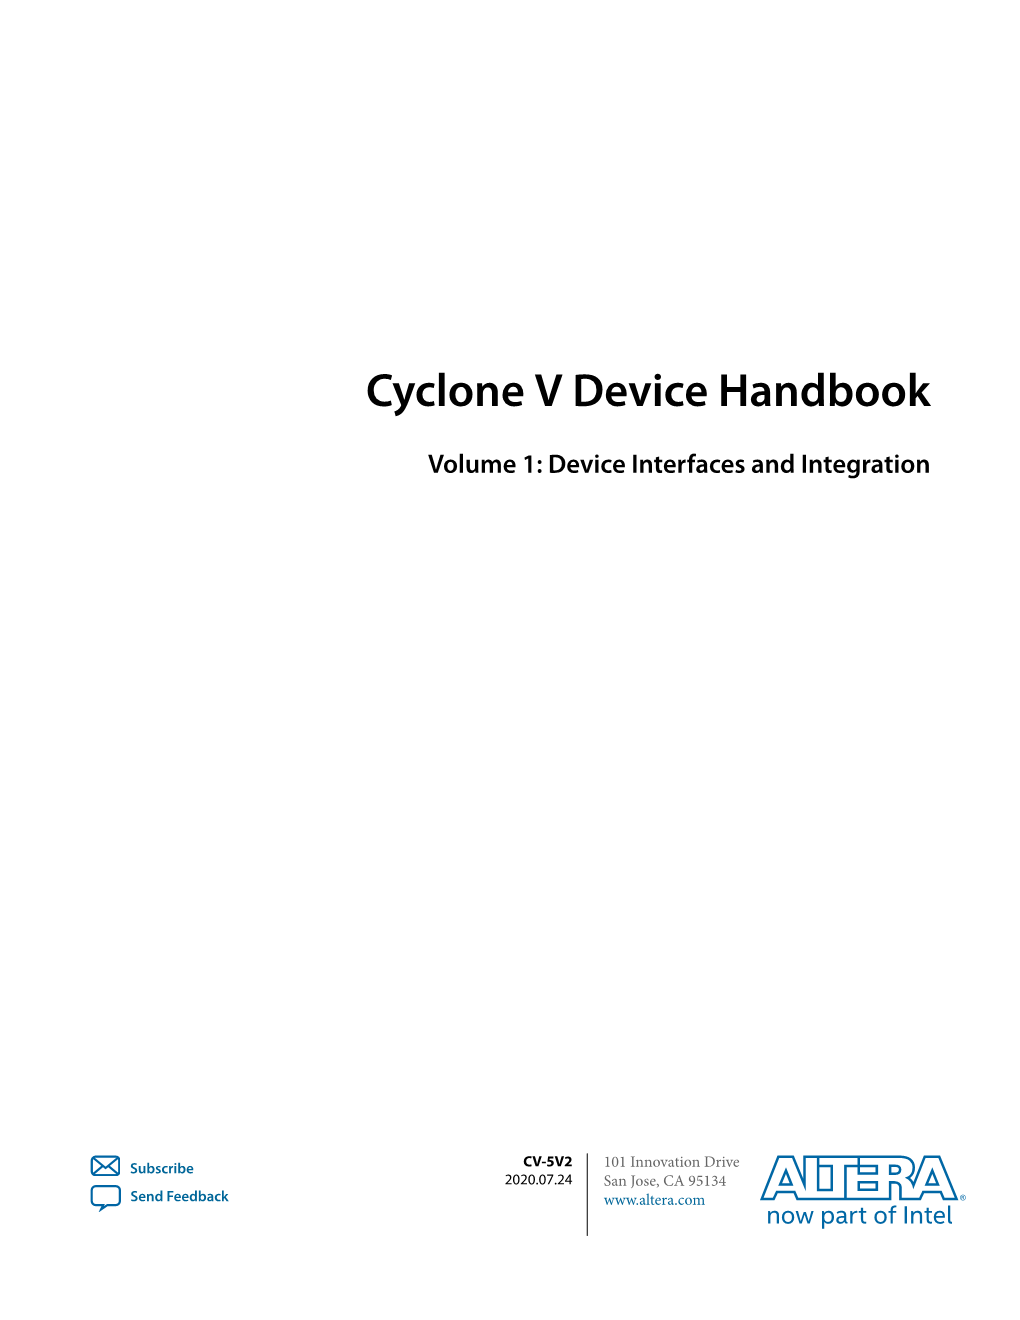 Cyclone V Device Handbook Volume 1